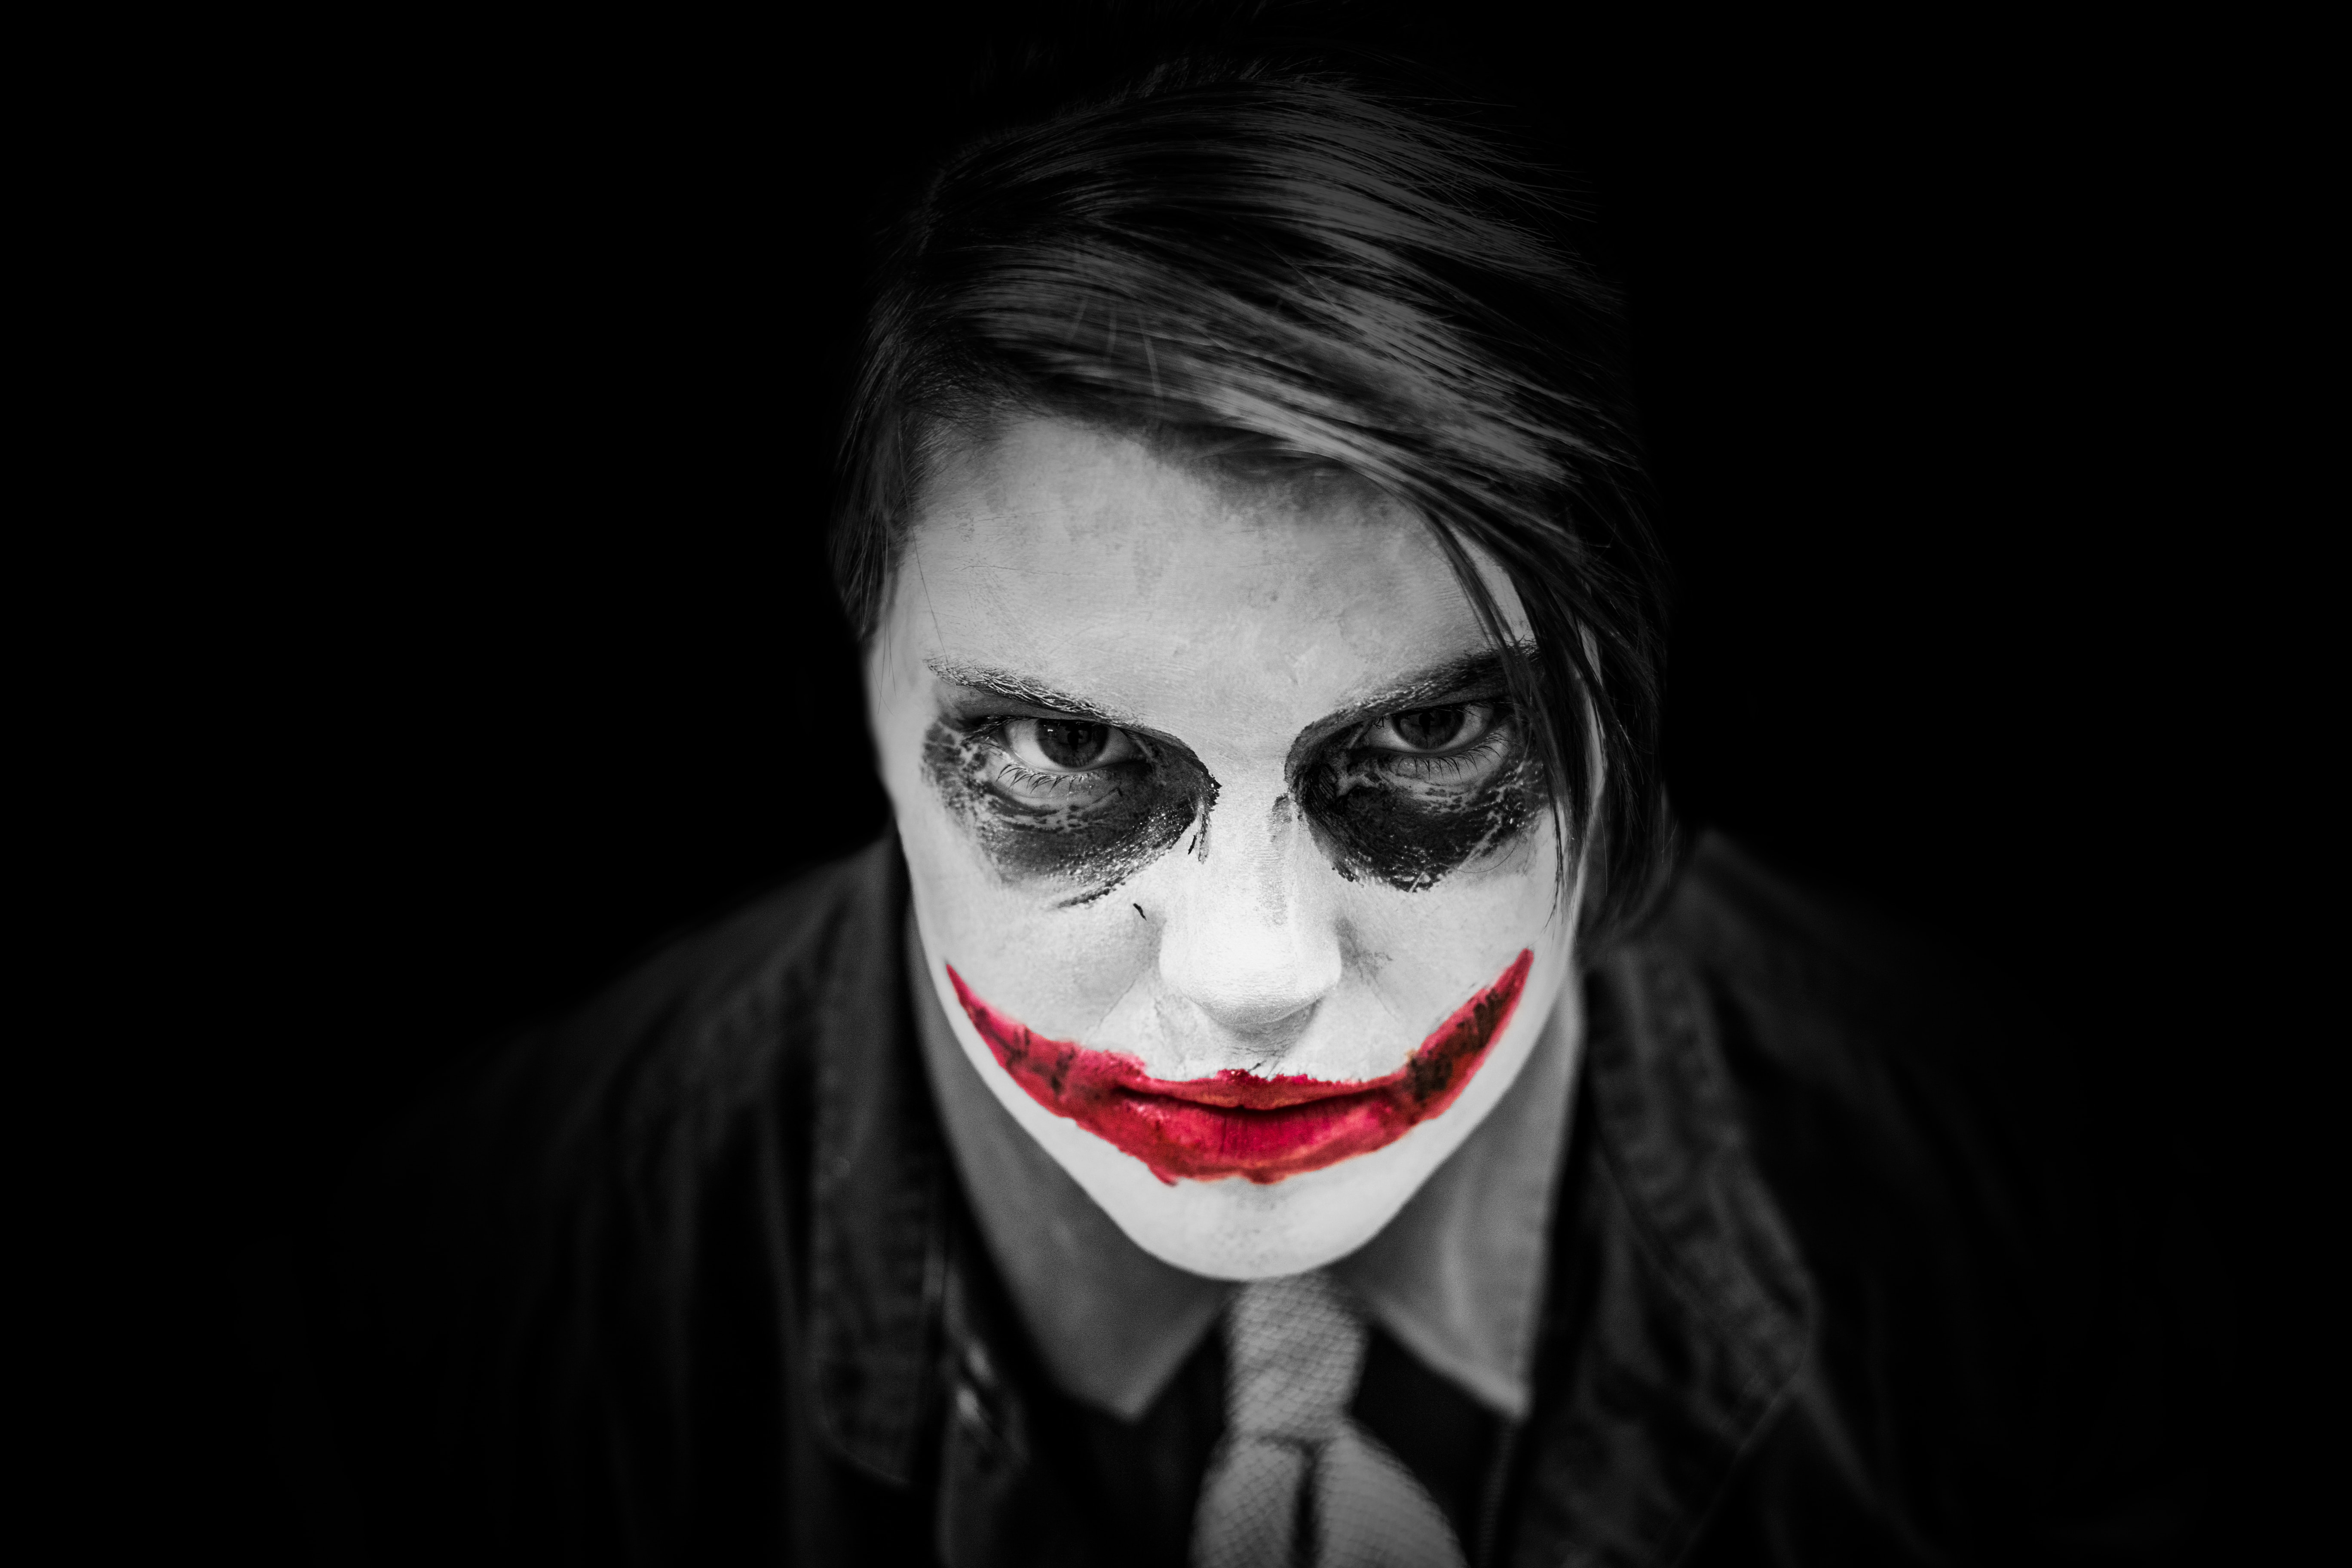 Joker Picture. Download Free Image